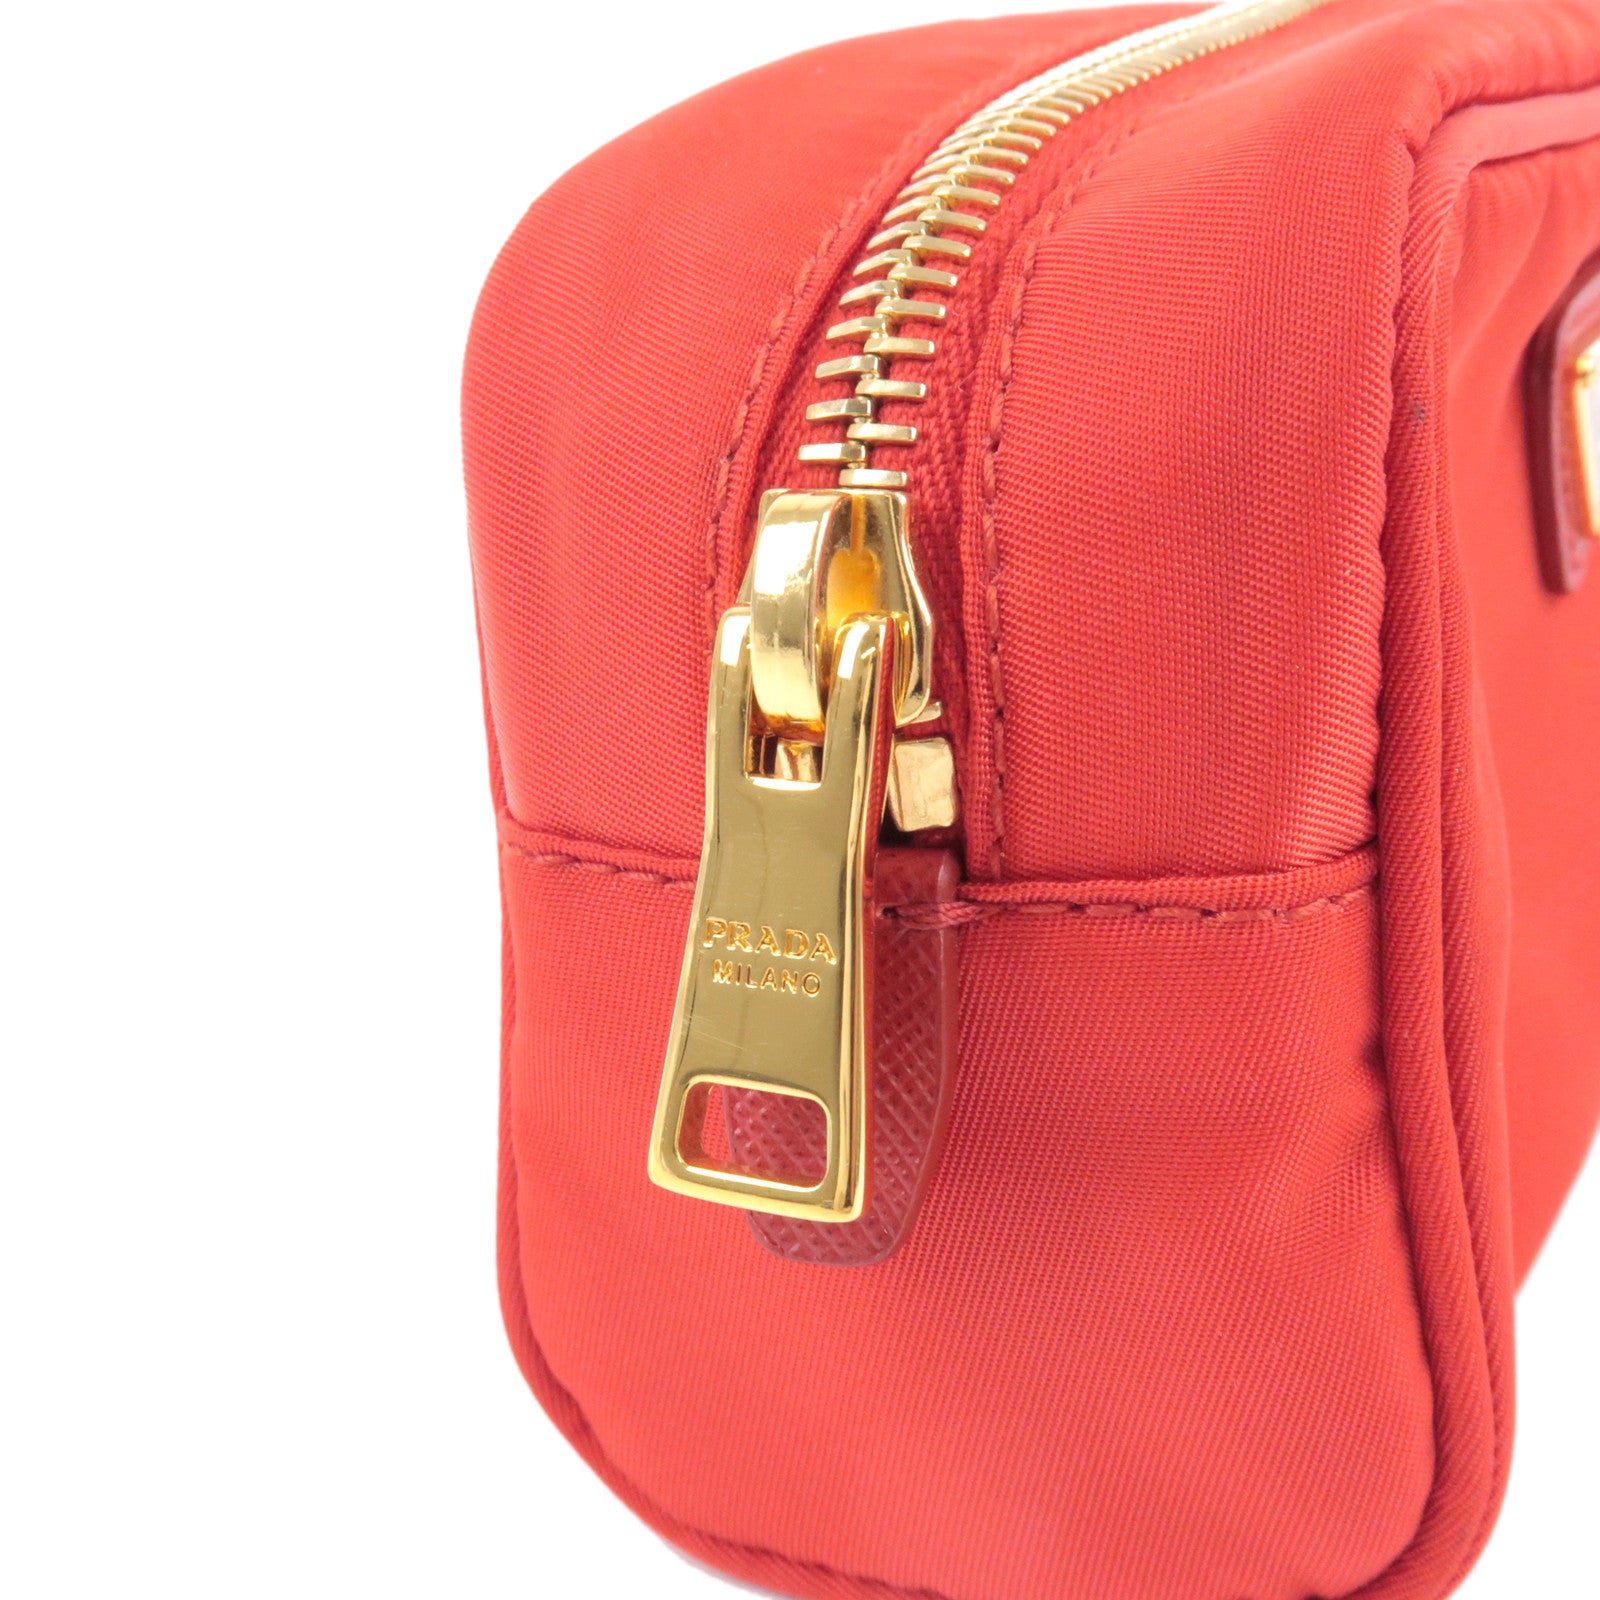 Prada | Bags | Prada Crossbody Camera Bag Red Leather Bh96 New | Poshmark